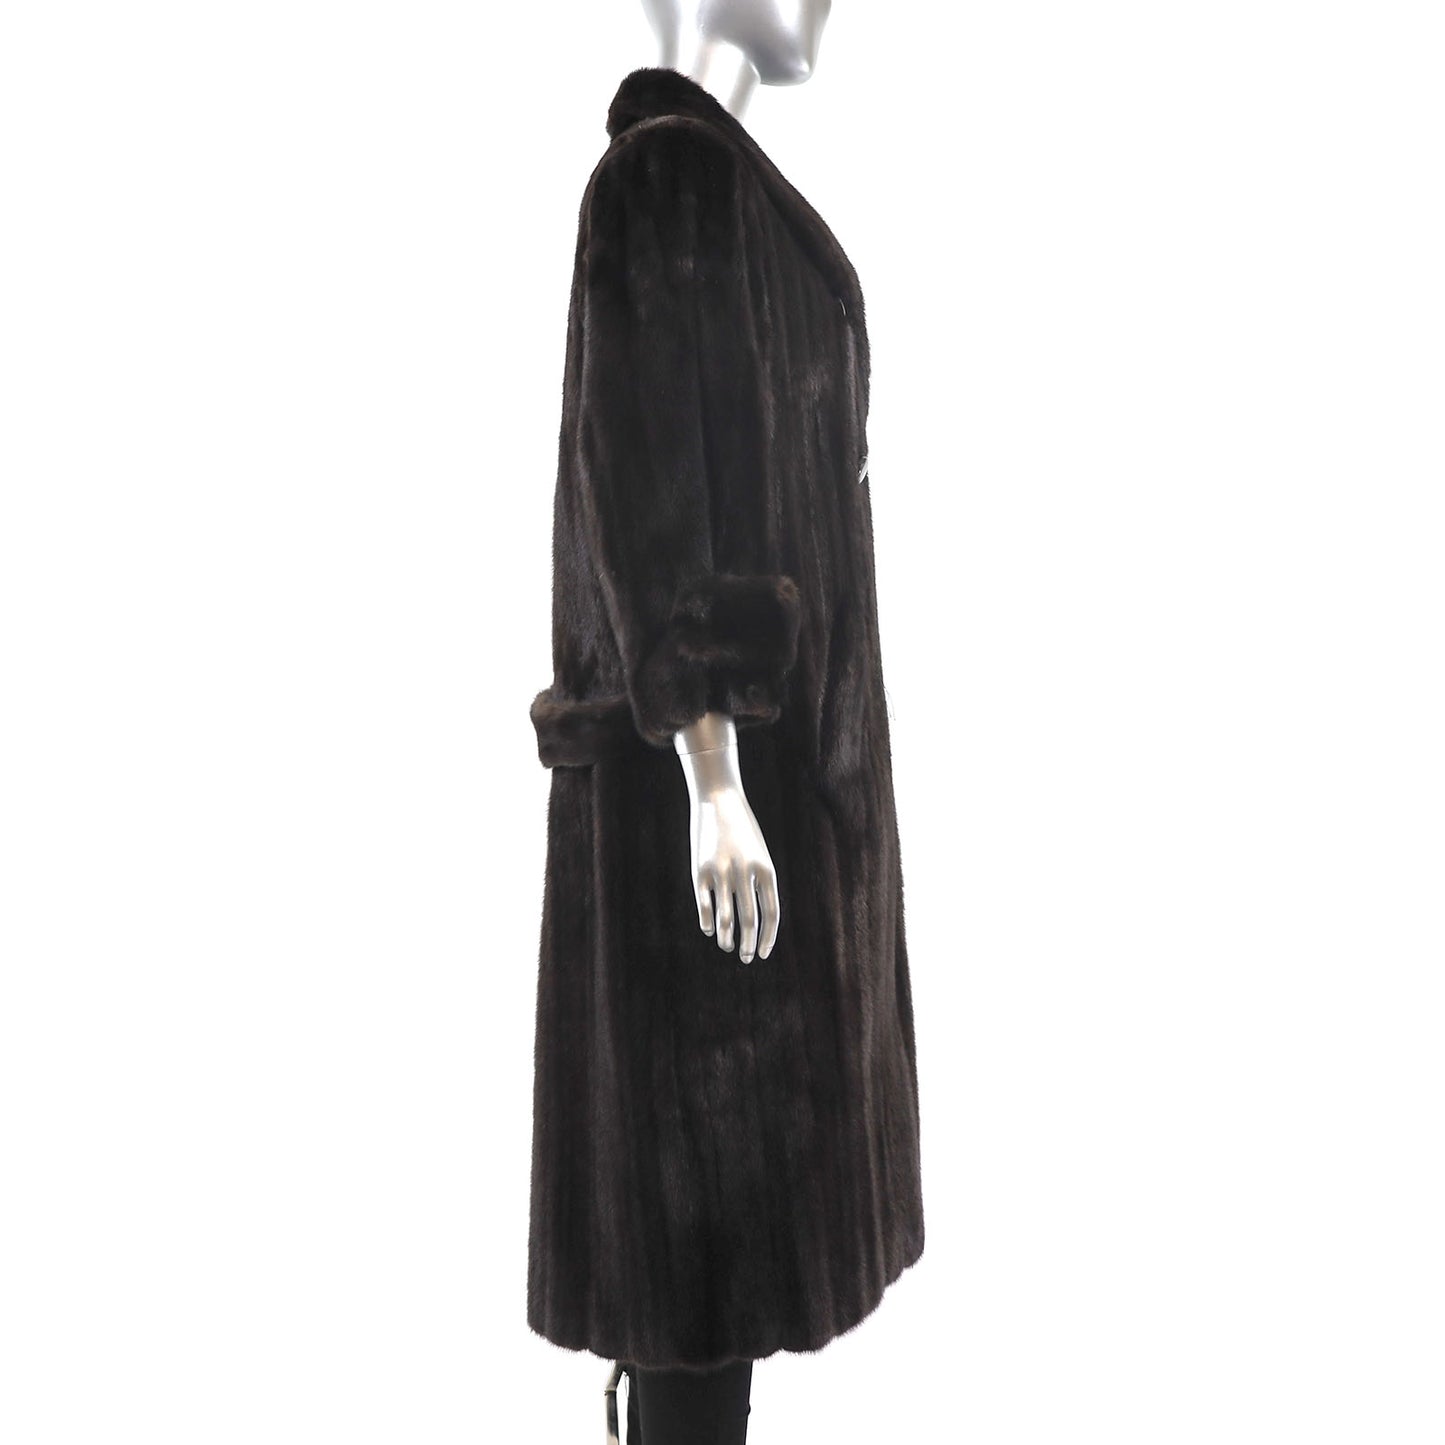 Birger Christensen Men's Mahogany Mink Coat with Short Sleeves- Size L